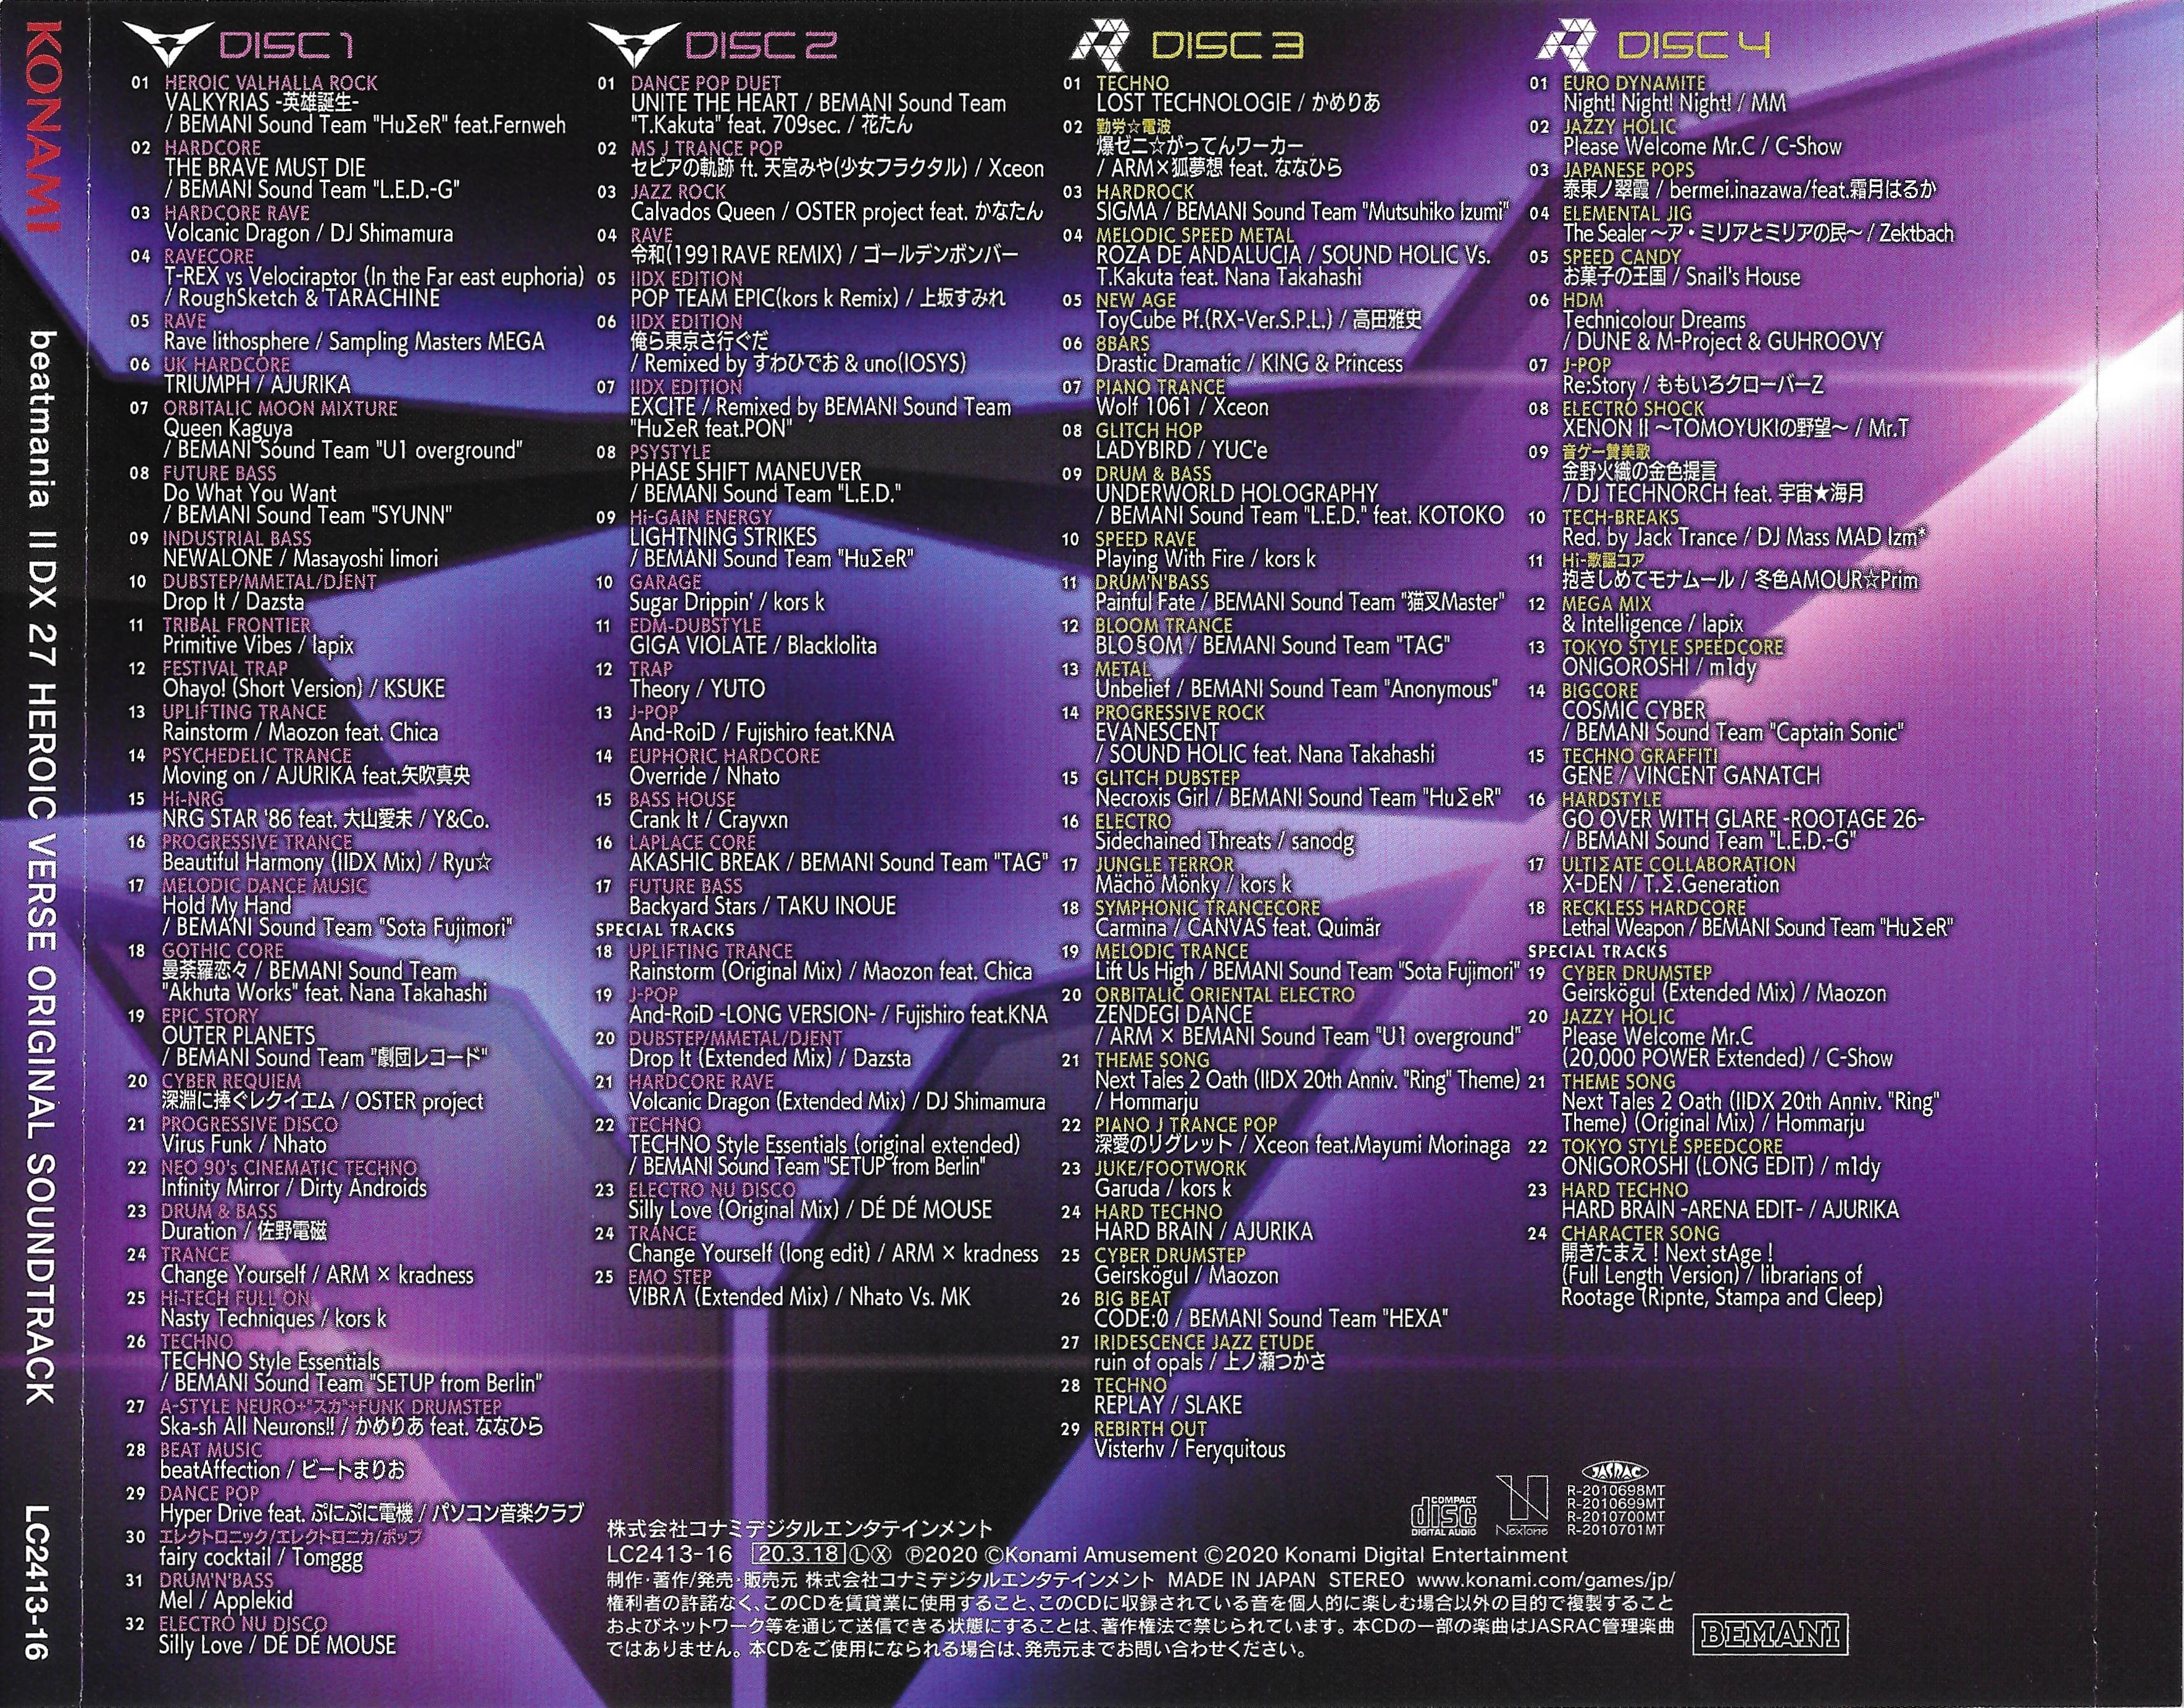 beatmania IIDX 27 HEROIC VERSE ORIGINAL SOUNDTRACK (2020) MP3 